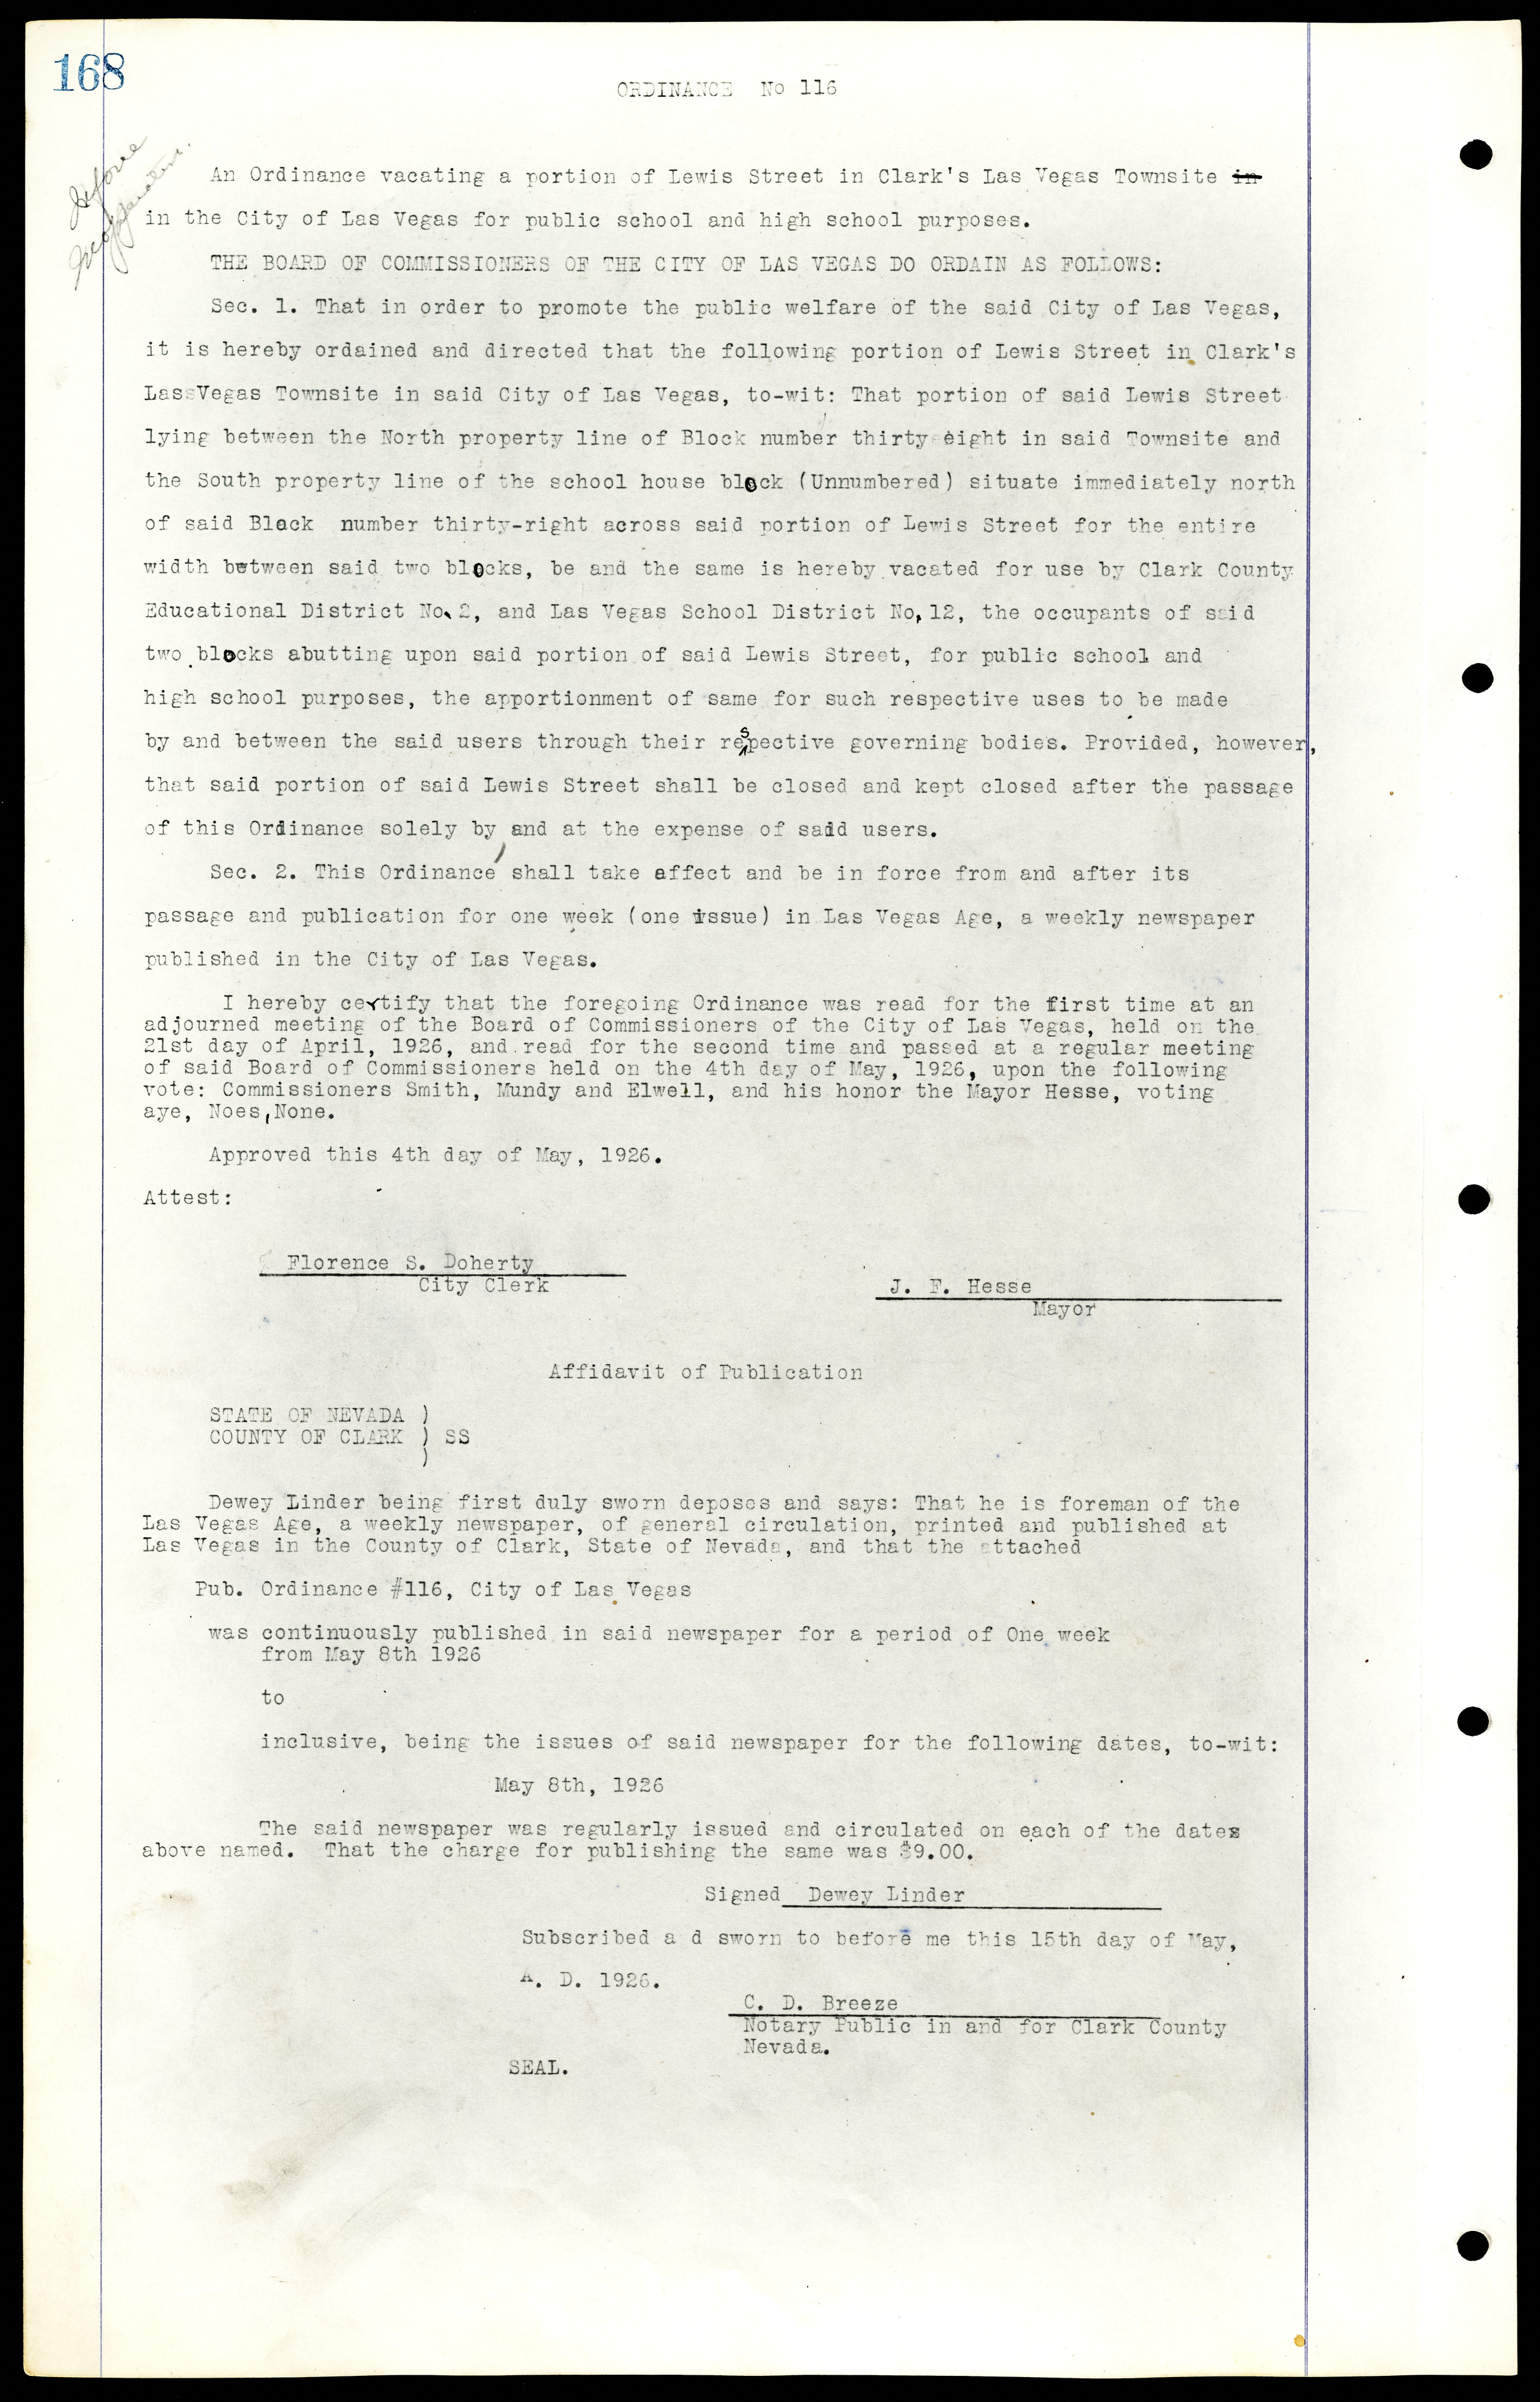 Las Vegas City Ordinances, July 18, 1911 to March 31, 1933, lvc000013-172